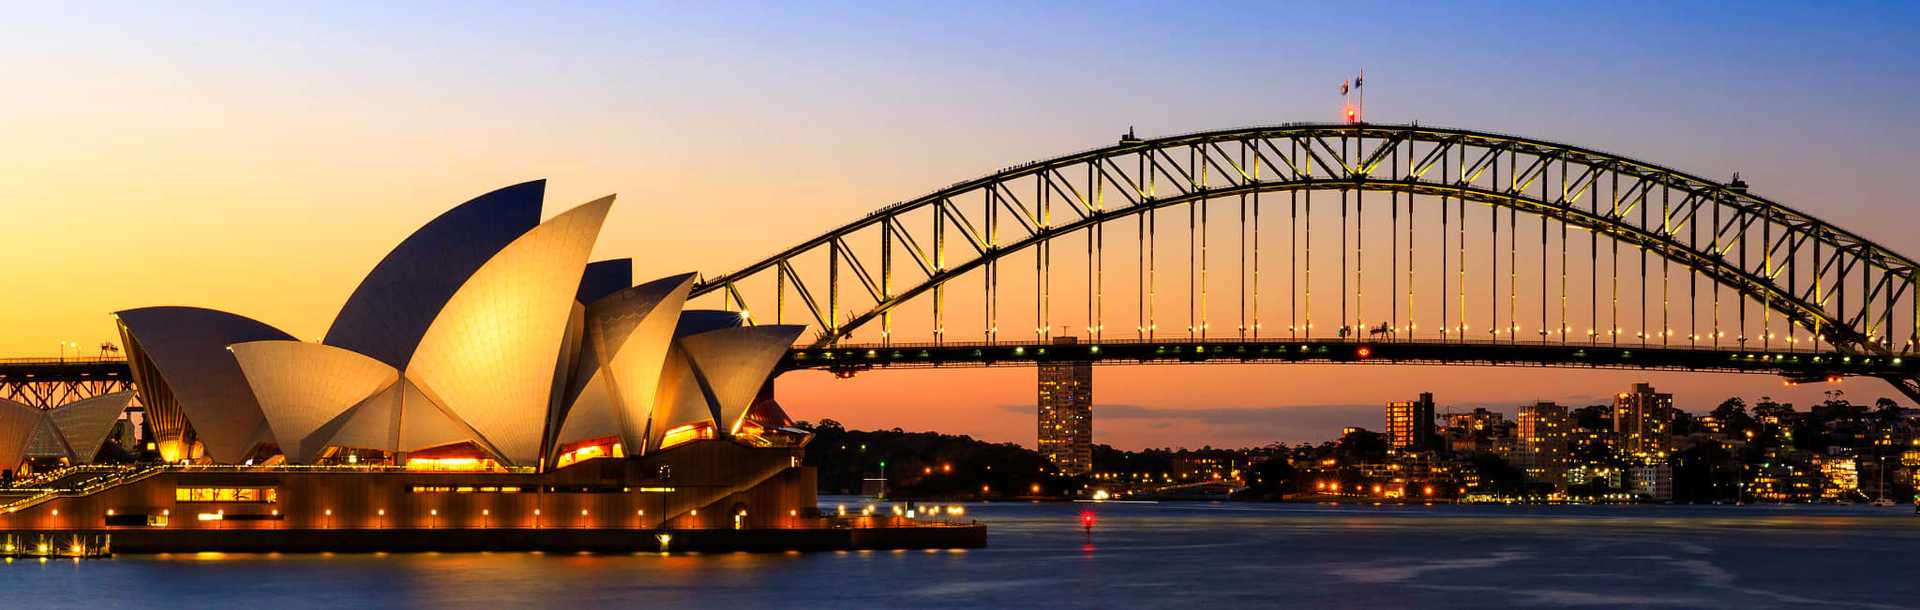 Sydney Opera House, Harbour Bridge, and Harbour in evening